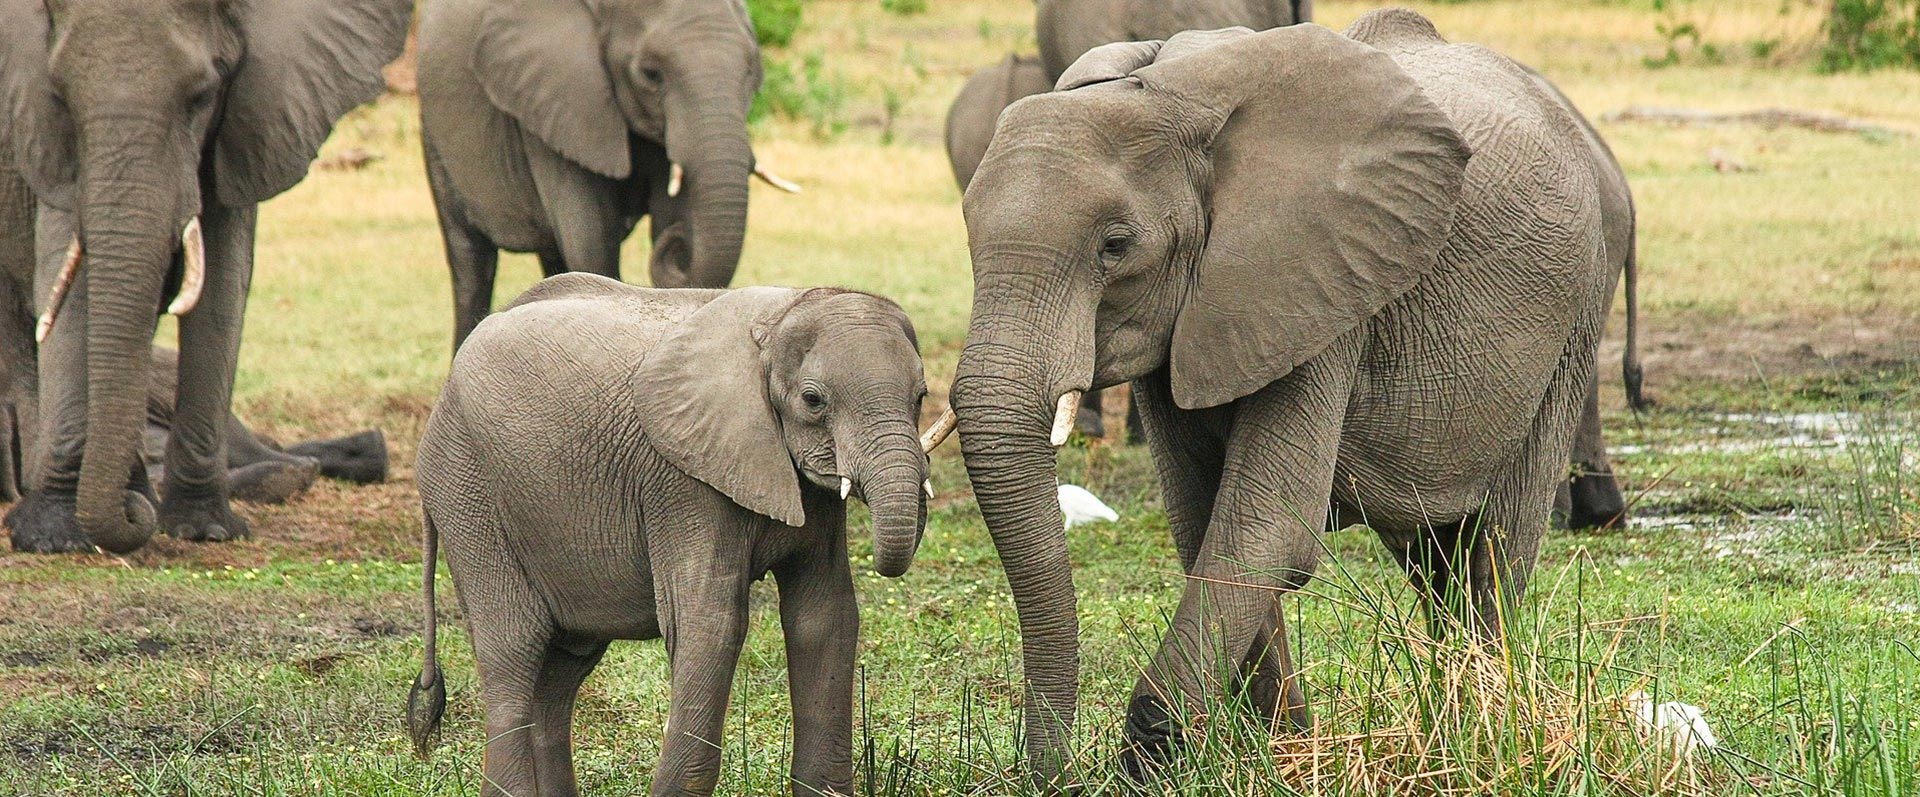 Gamewatchers Safari - elephants 